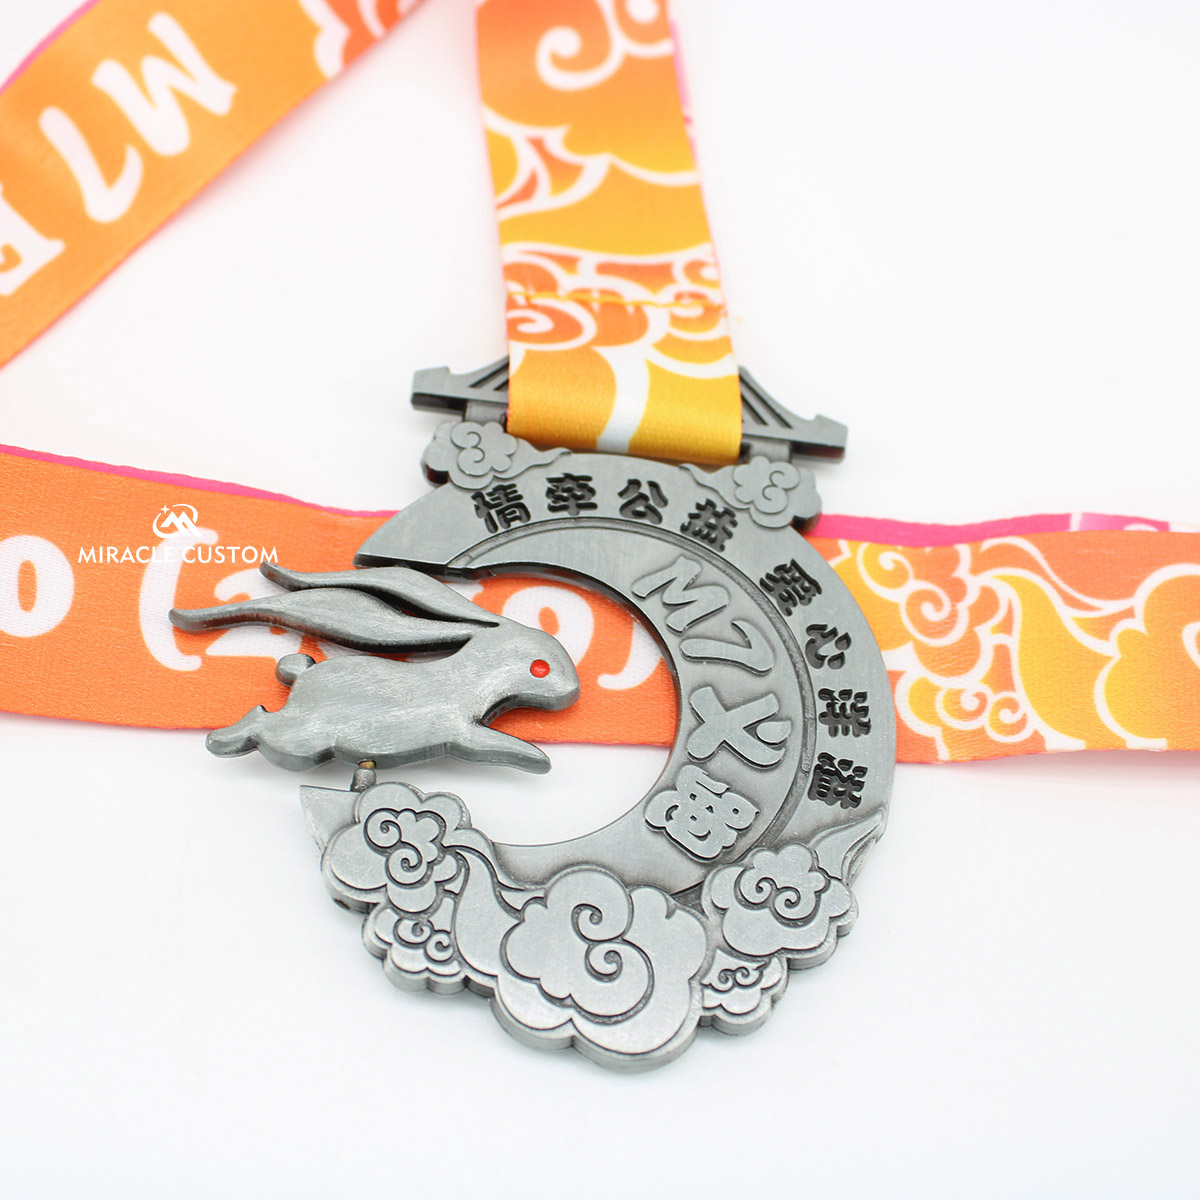 Custom Charity Run Spin Medals